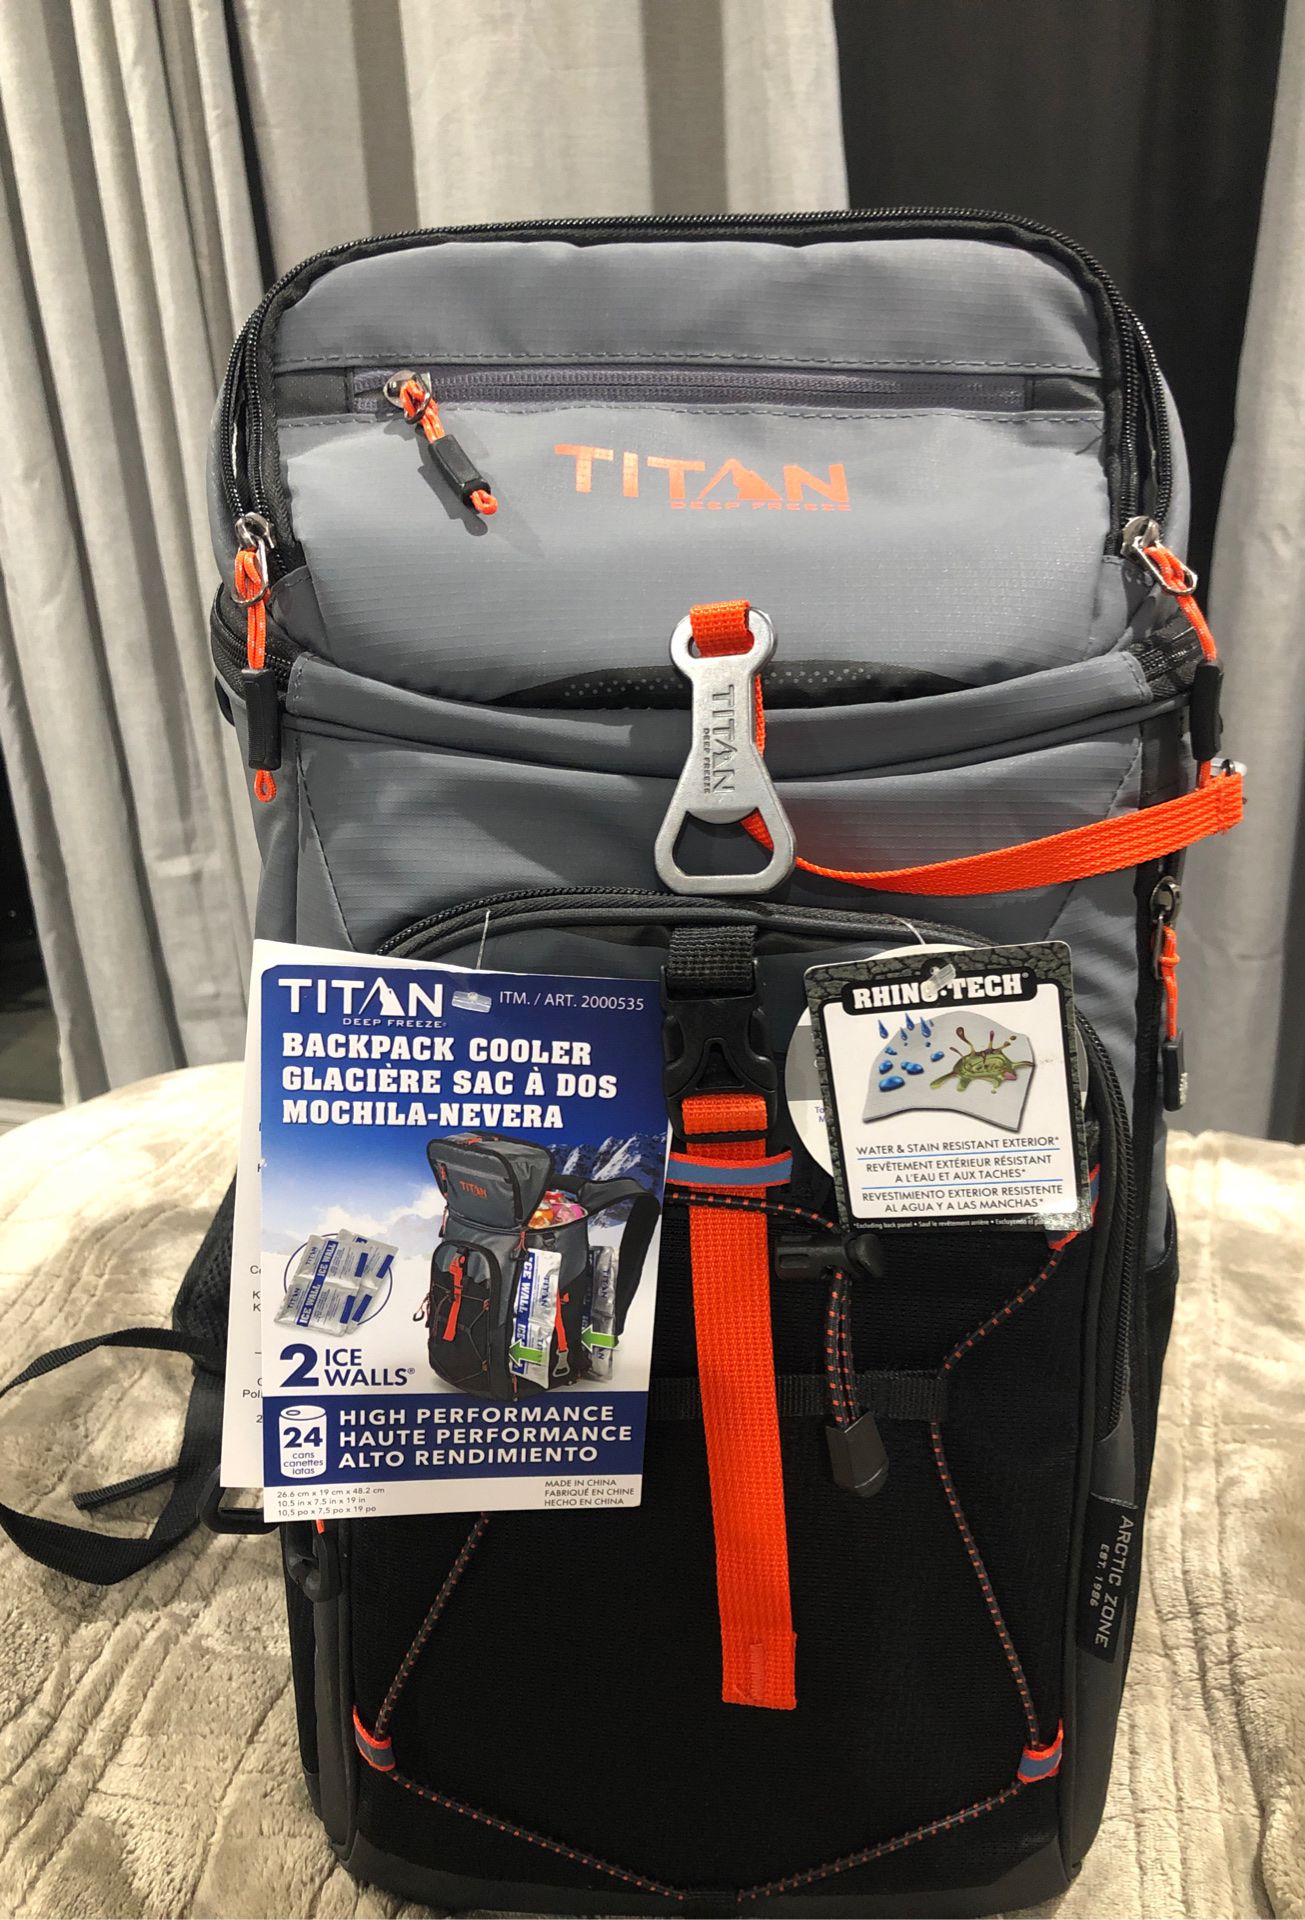 Titan deep freeze backpack cooler